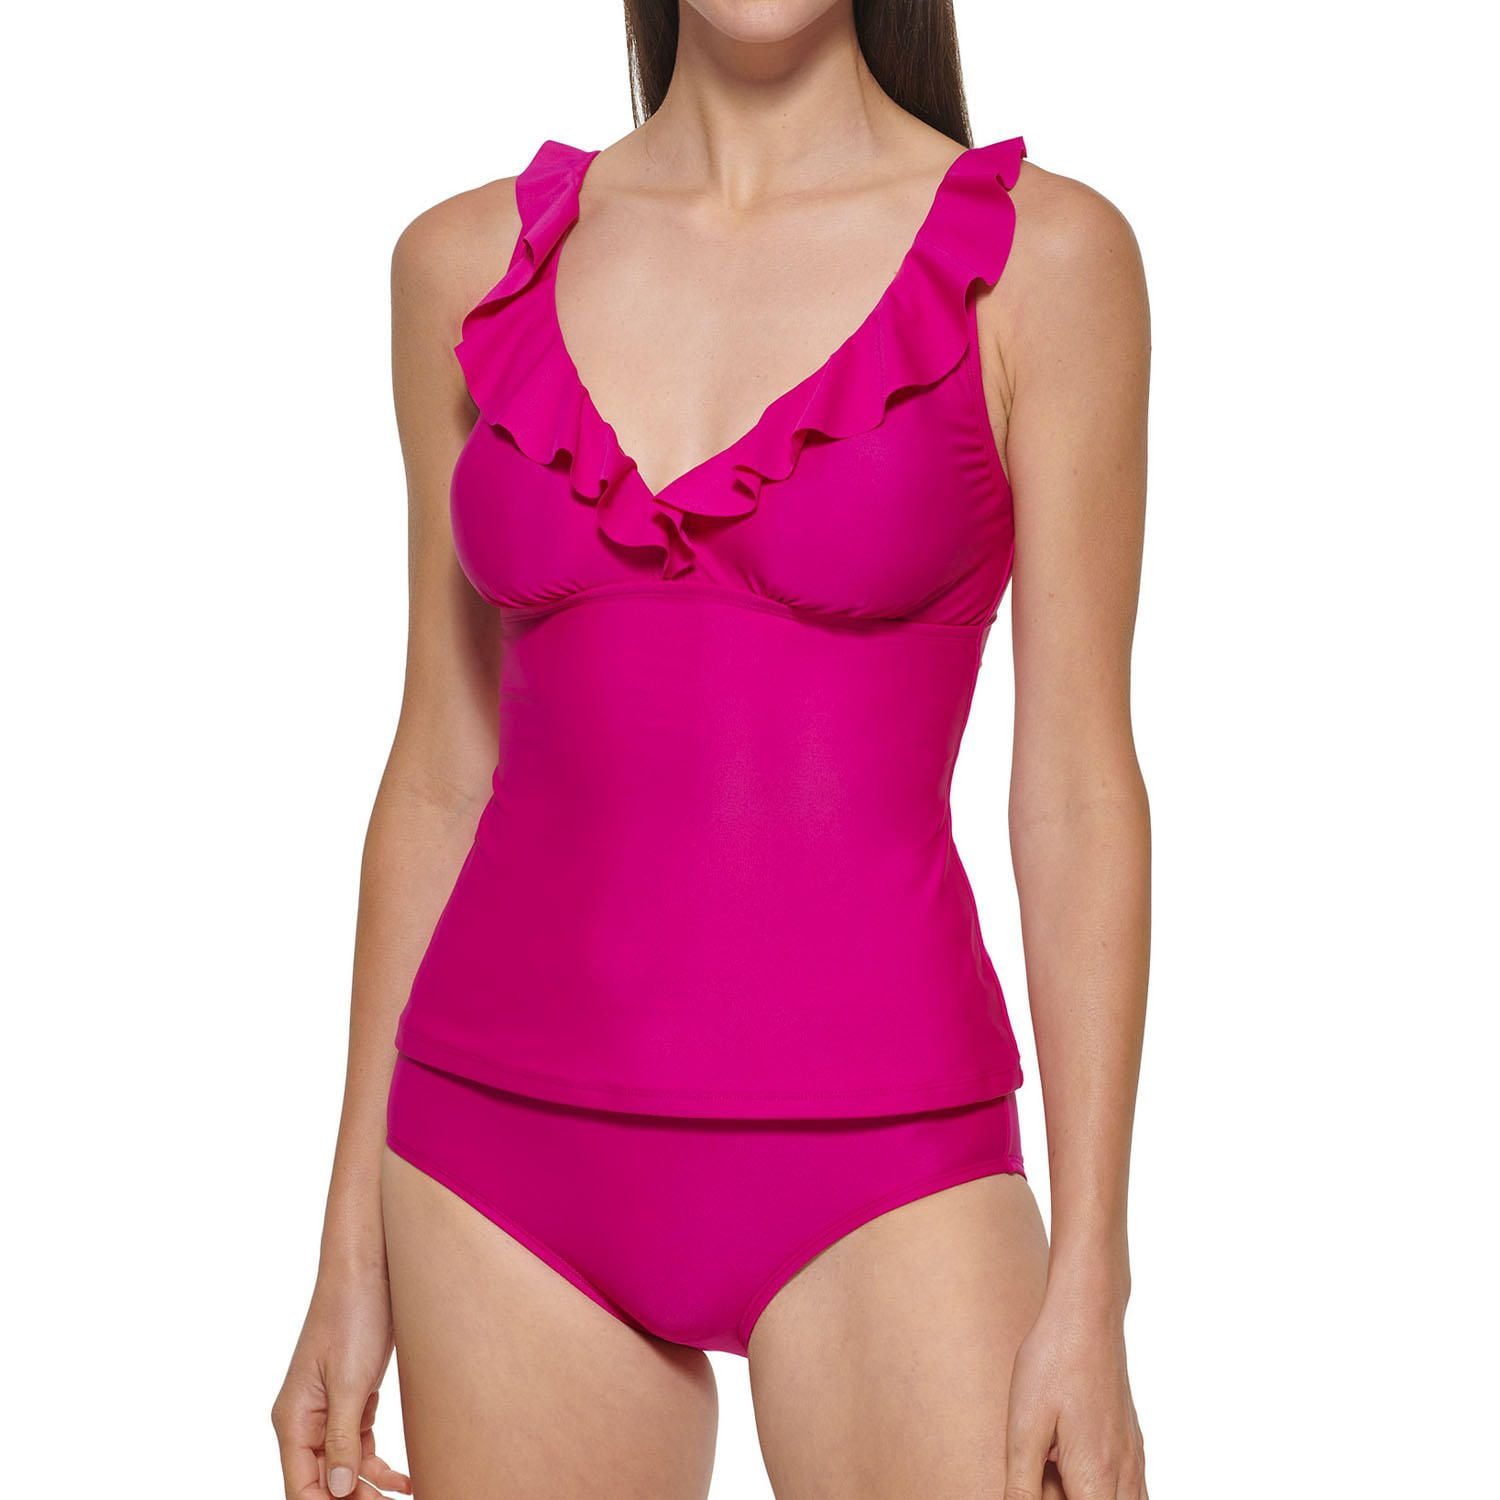 DKNY Women's 2 Piece Ruffled Tankini Swimsuit (Pink, S)